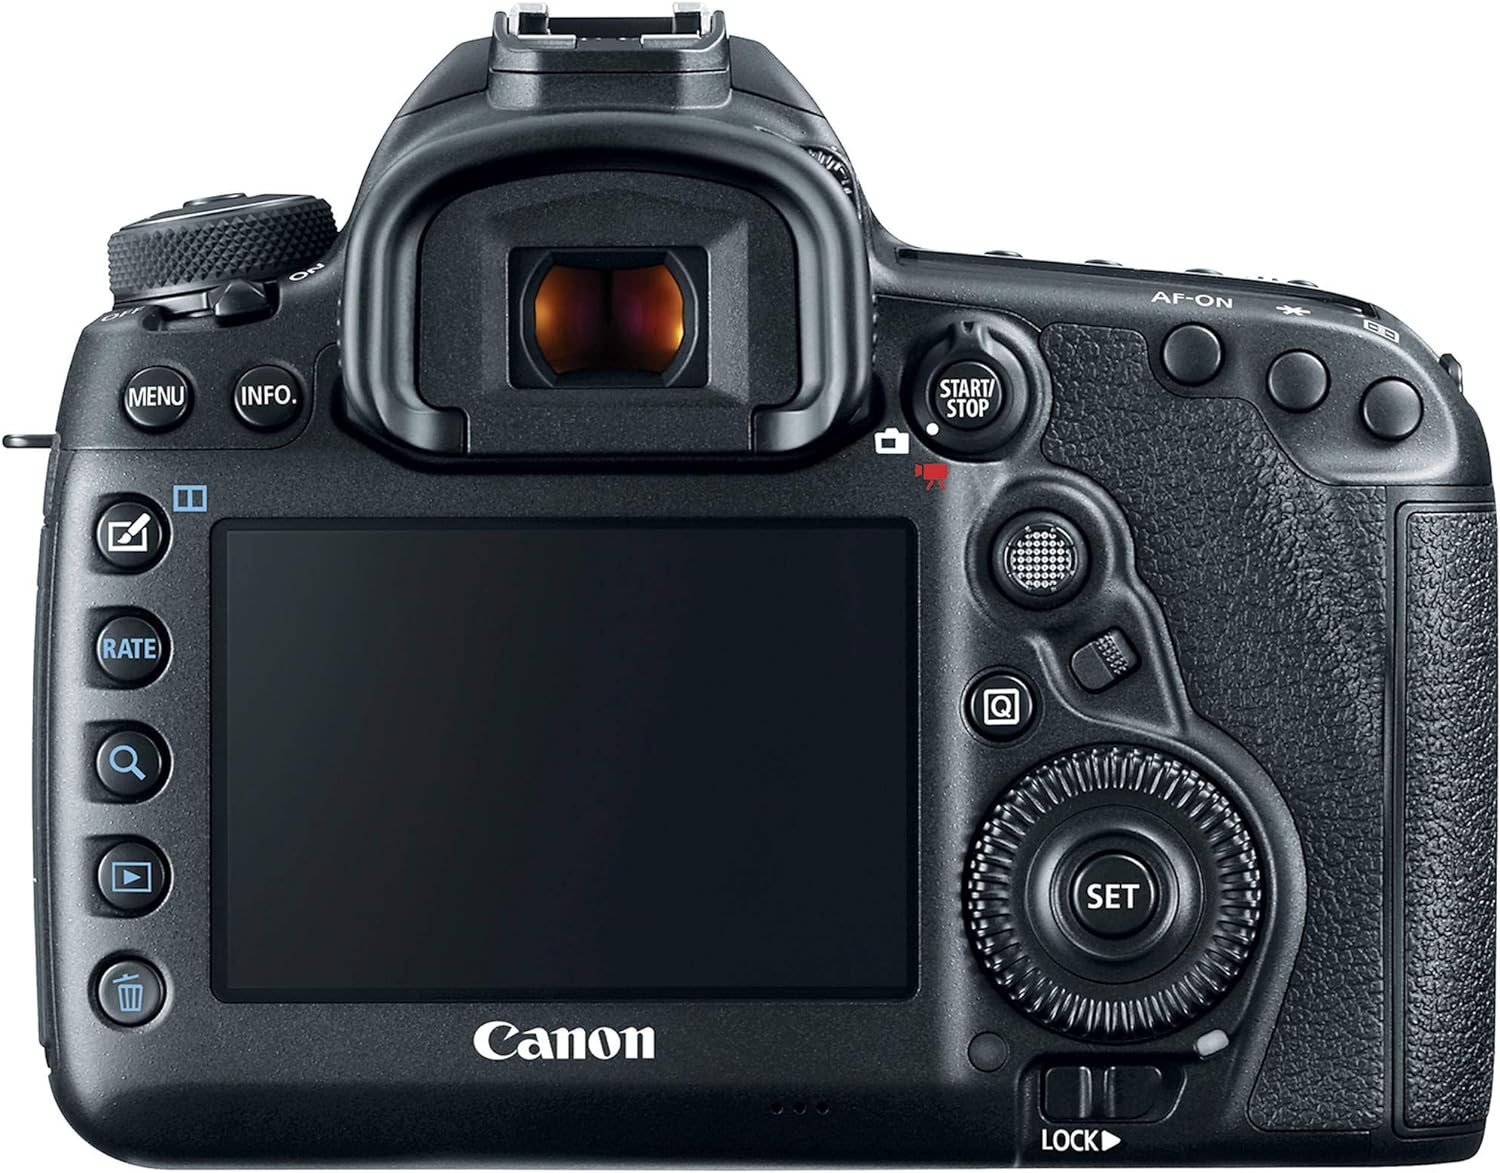 Canon EOS 5D Mark IV DSLR Camera: A Powerful Photography Tool